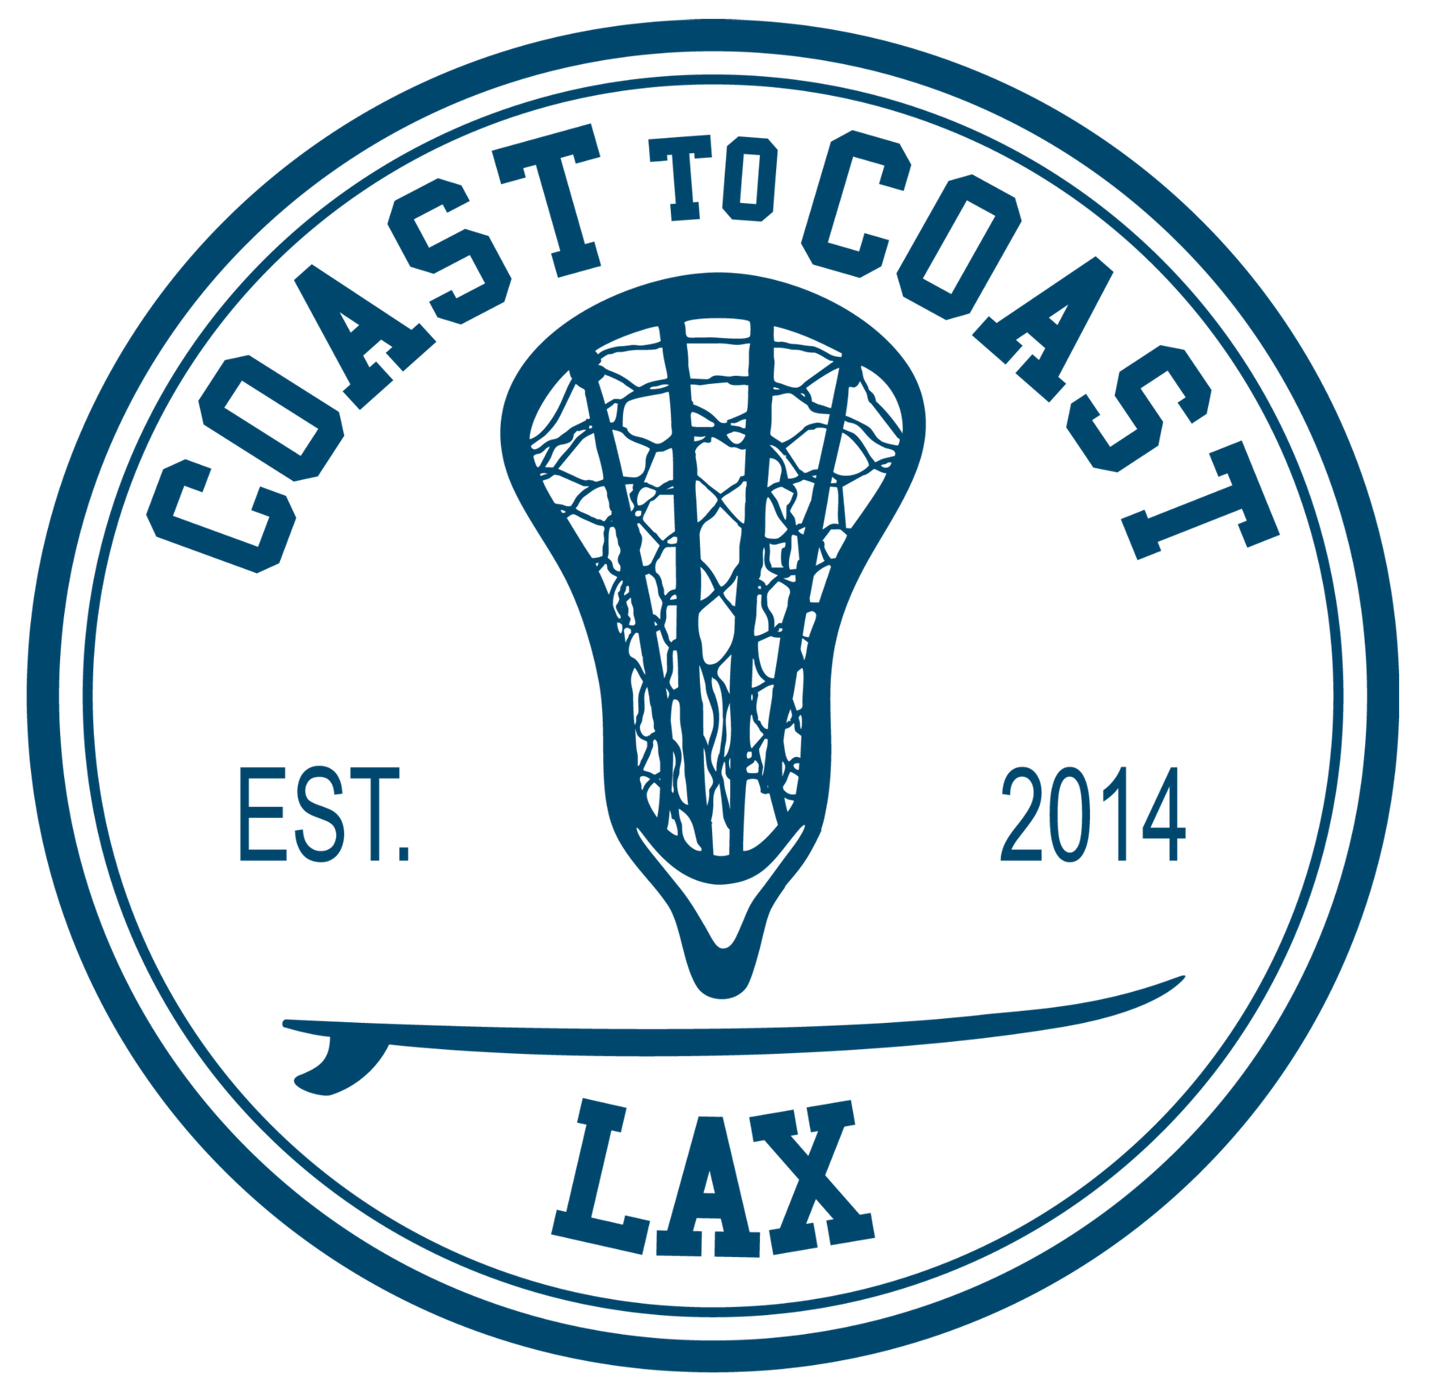 Coast to Coast Lax Sticker